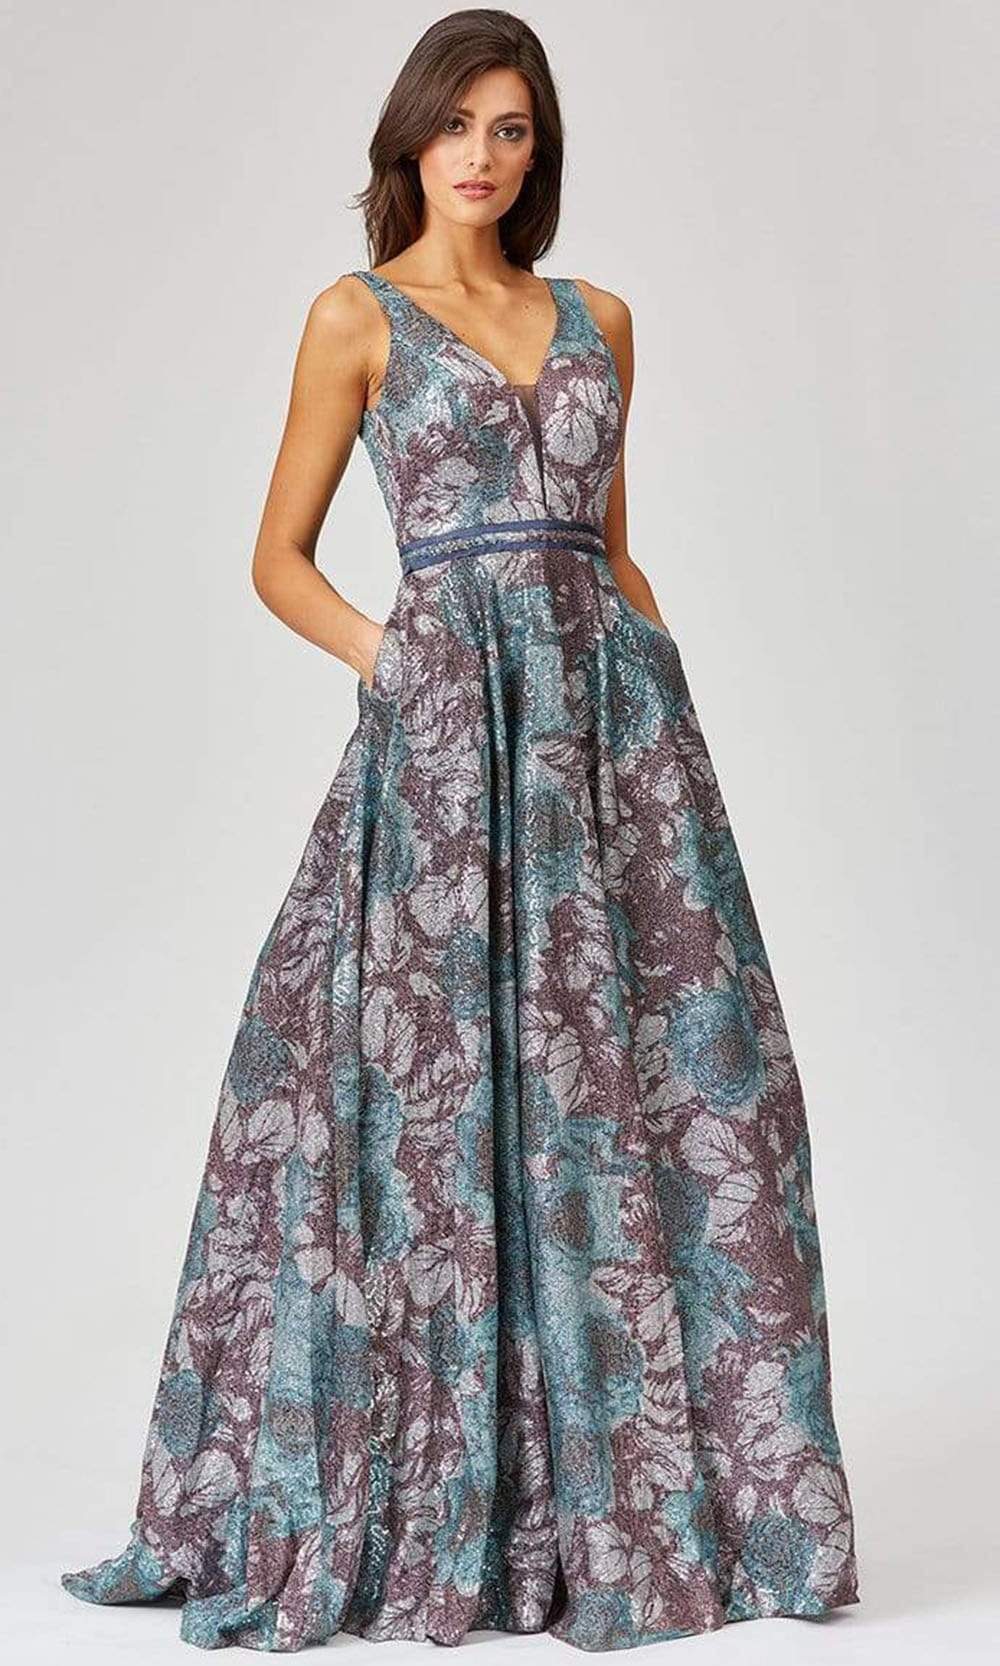 Lara Dresses - 29460 Deep V Neck A-Line Gown Prom Dresses 0 / Blue Multi